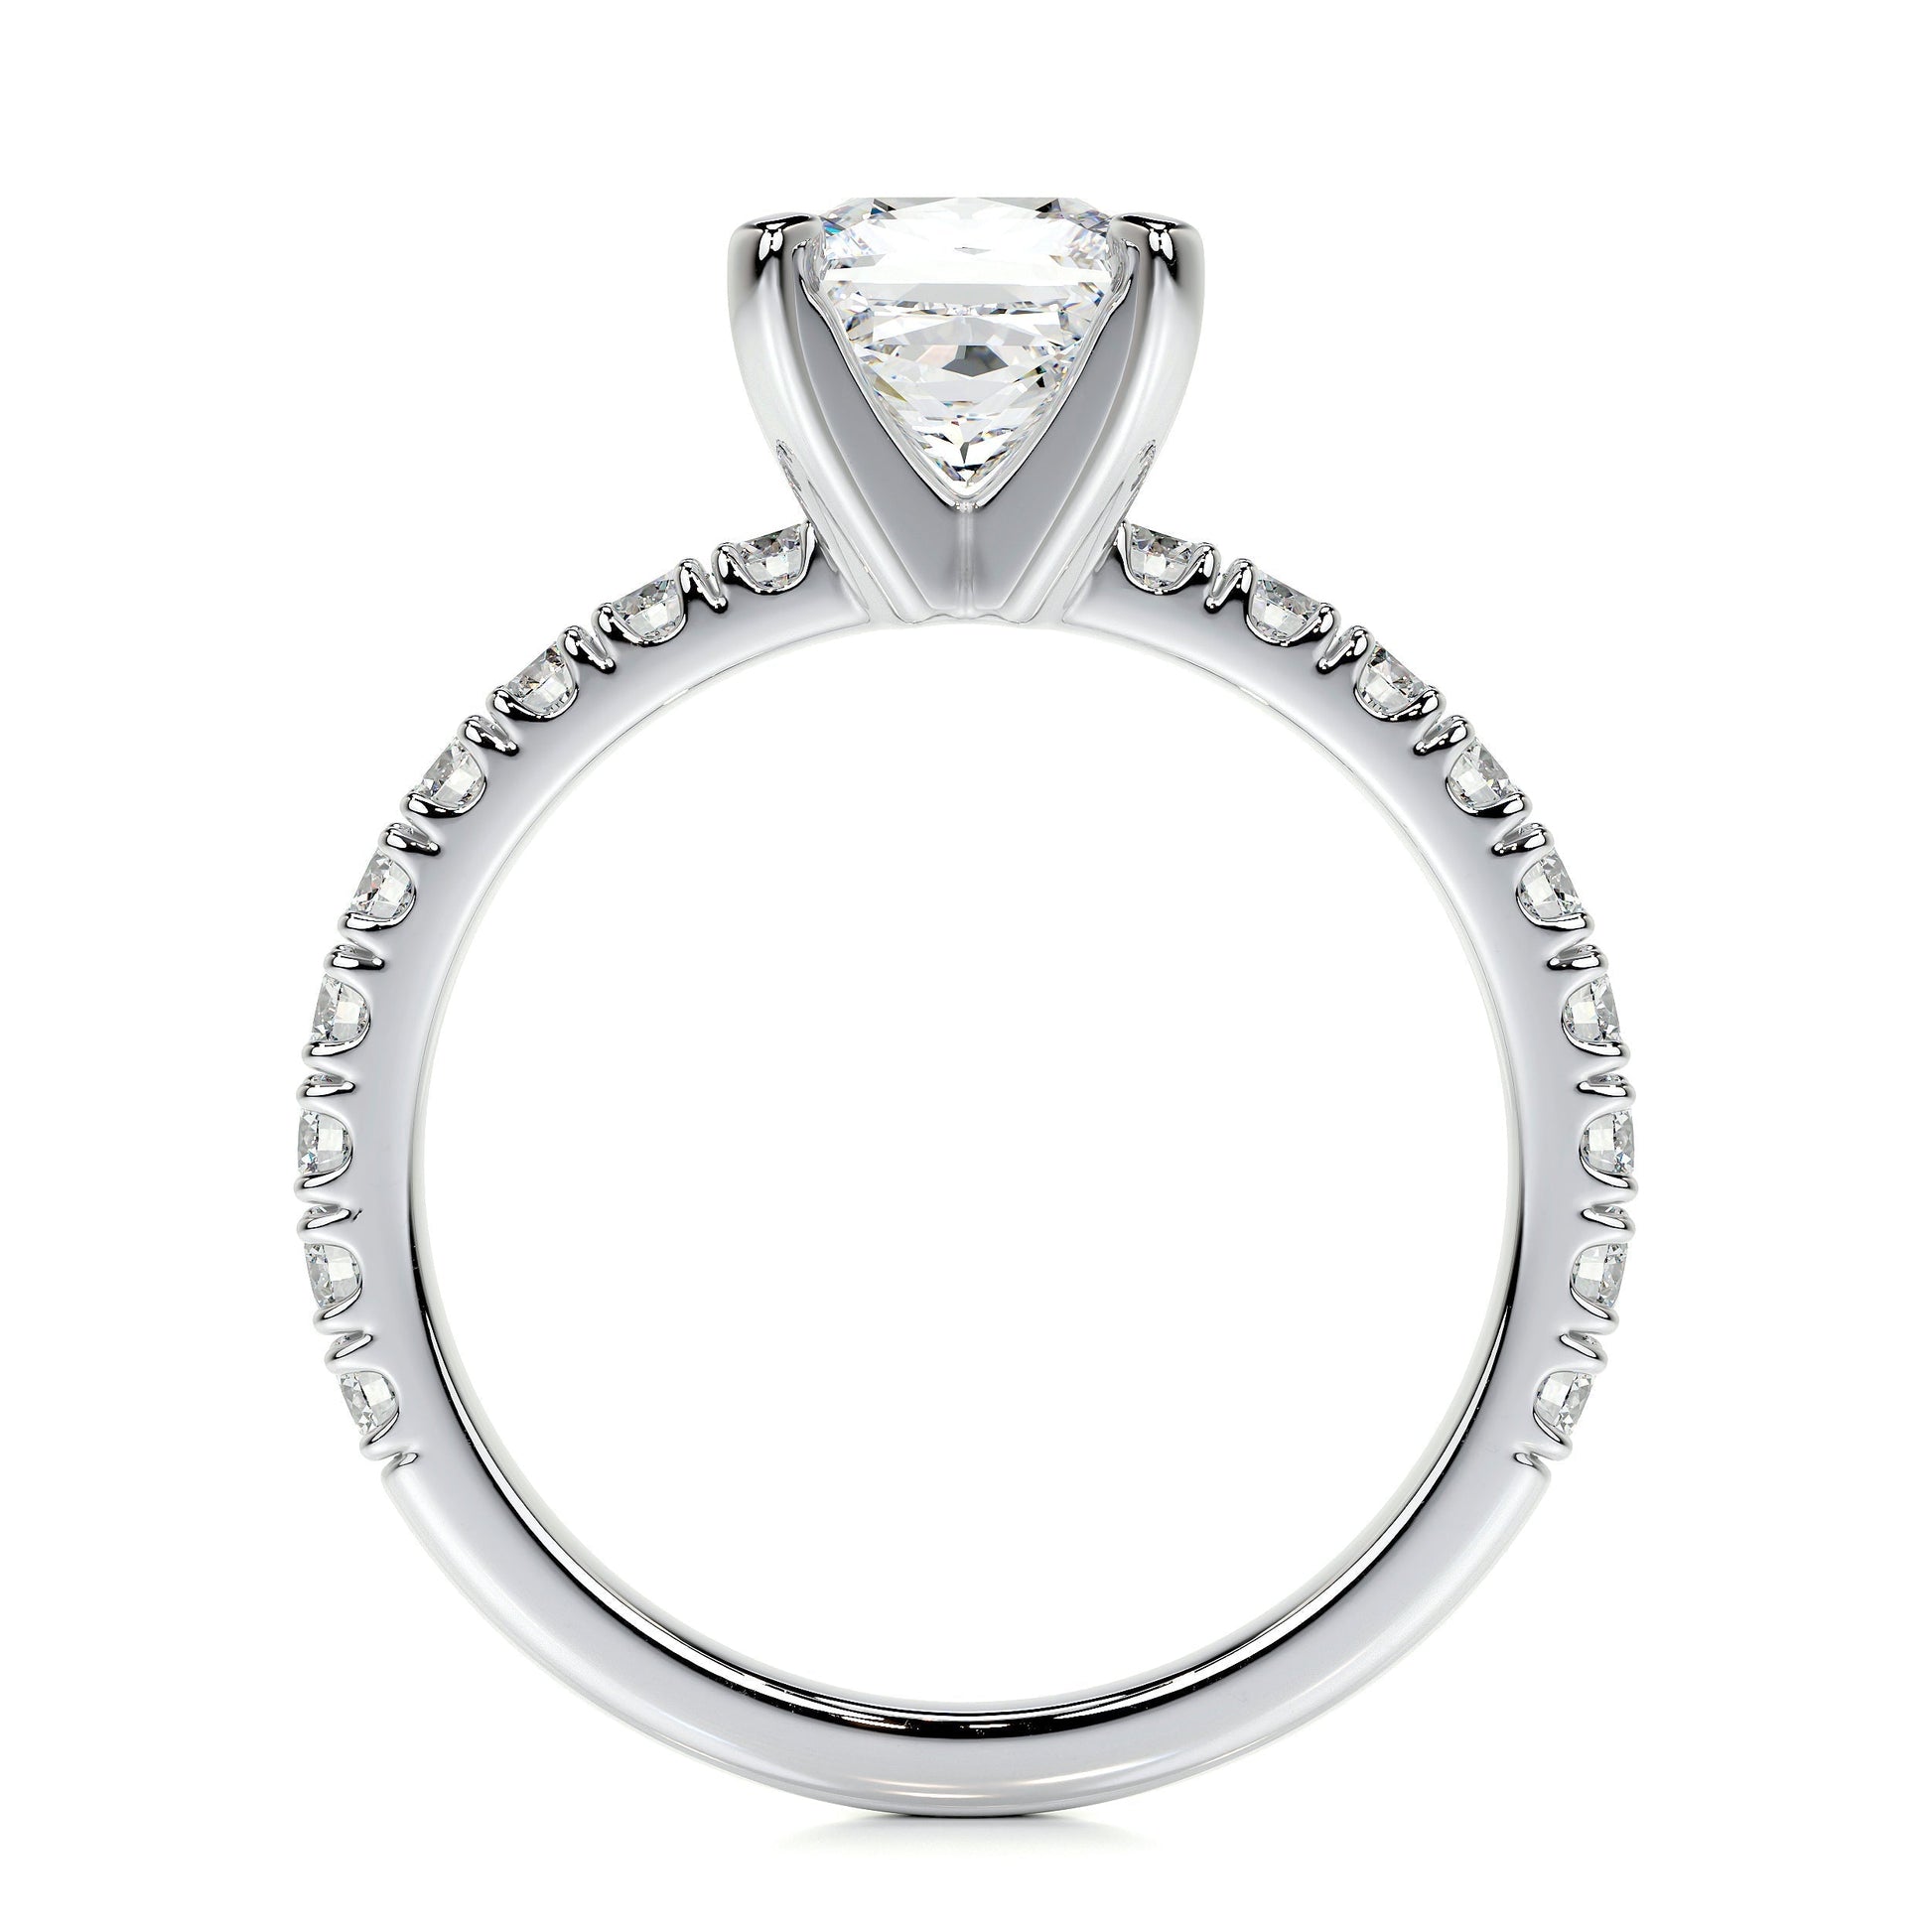 1.0 CT Princess Solitaire CVD D/VS1 Diamond Engagement Ring 6